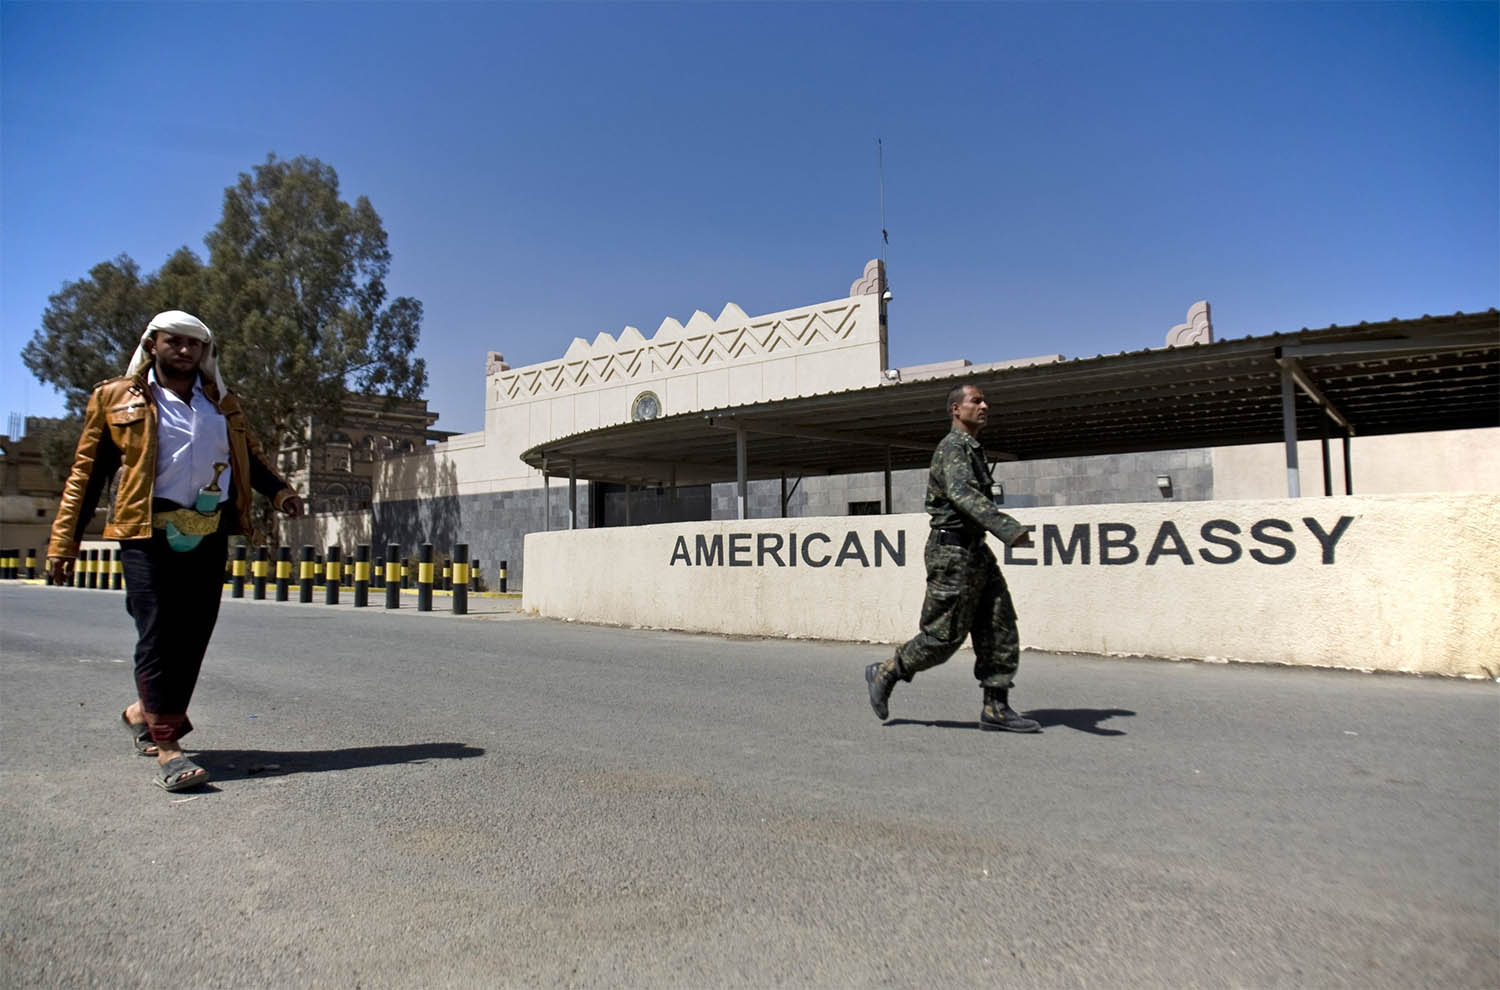 Washington shut down its embassy in Yemen in 2015